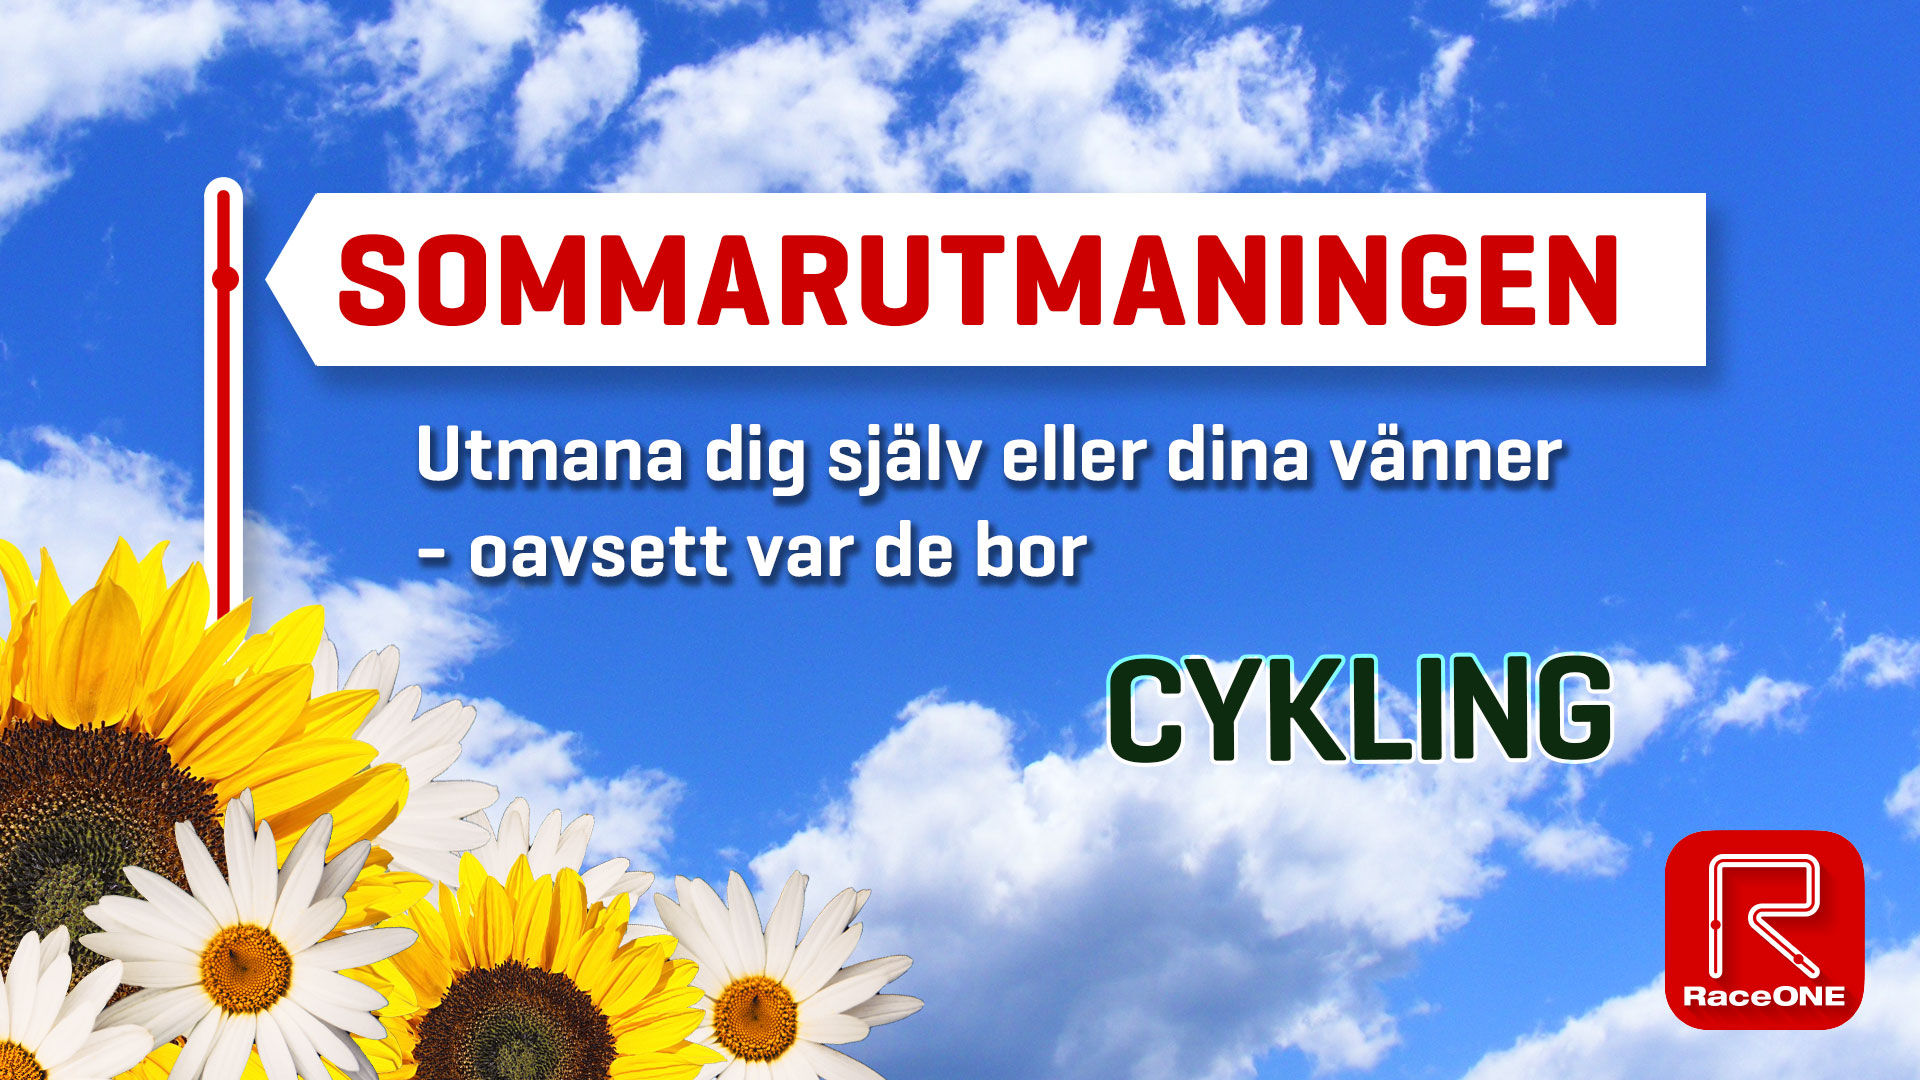 RaceONE Sommarutmaning - Cykling - 42km - Augusti 2020